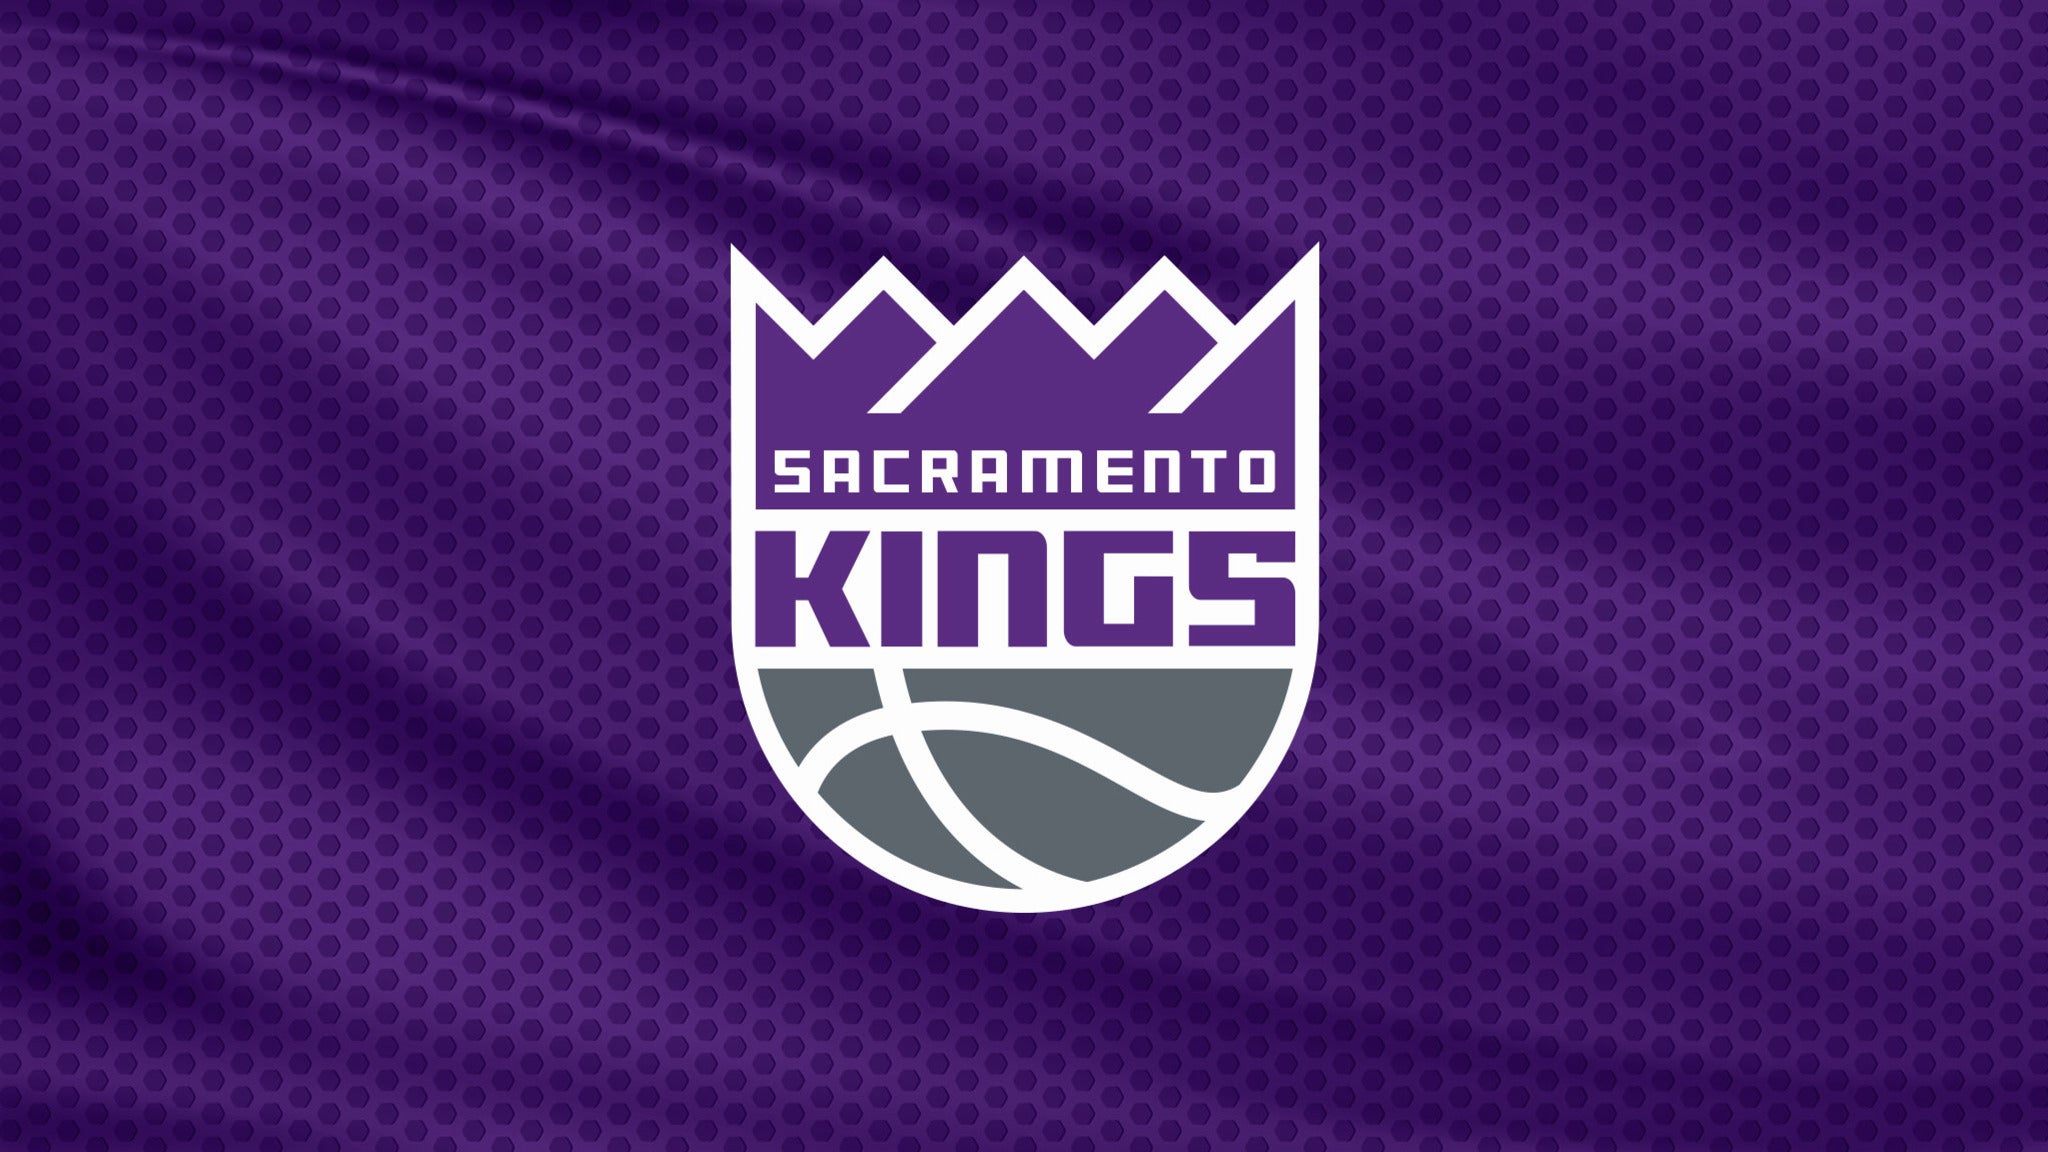 Sacramento Kings vs Washington Wizards